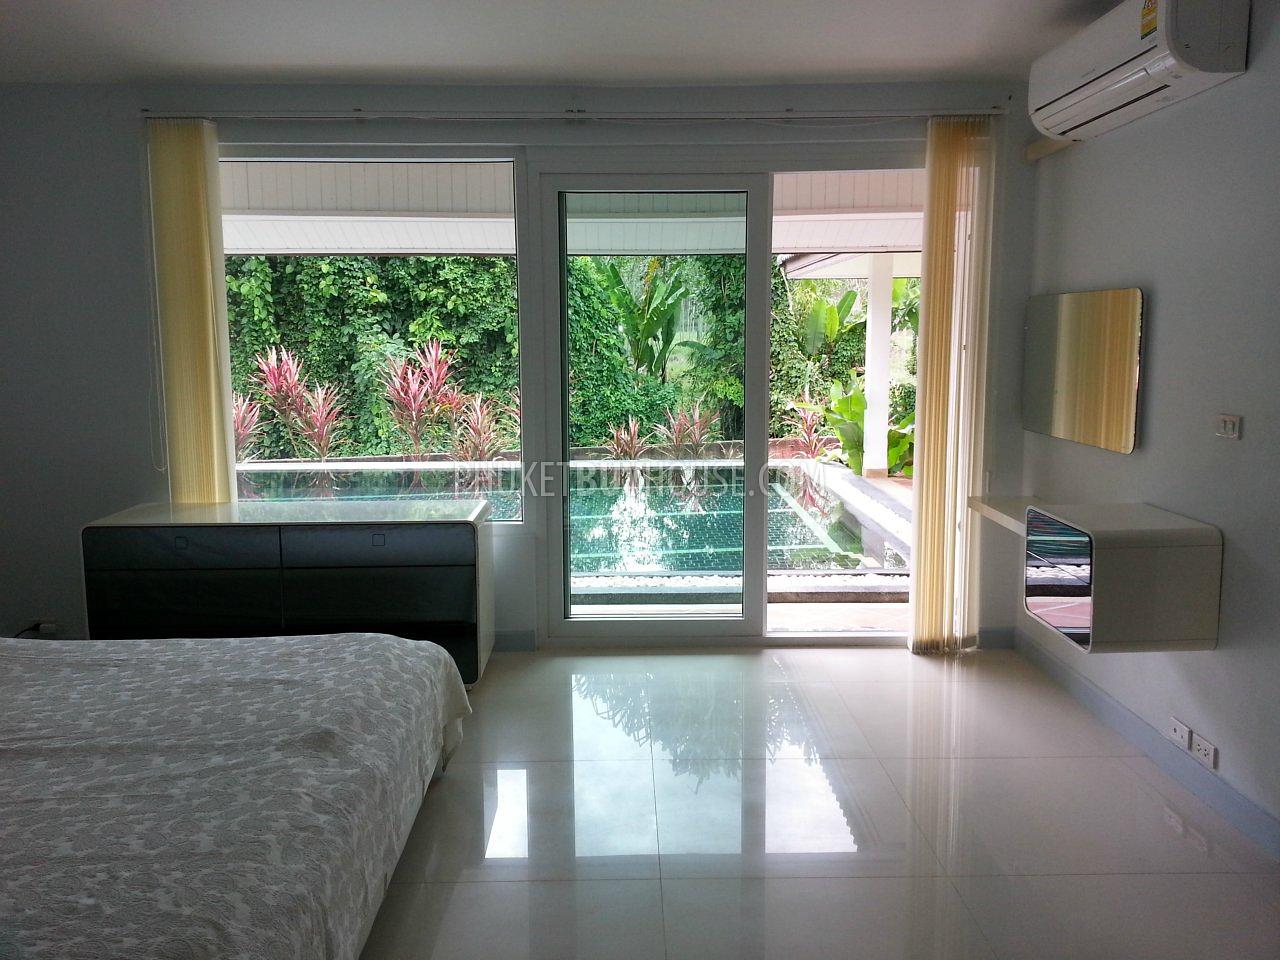 EAS3910: Hot! 4-bedroom modern pool villa on a 1 rai land plot near PIADS (UWC). Urgent sale!. Photo #38